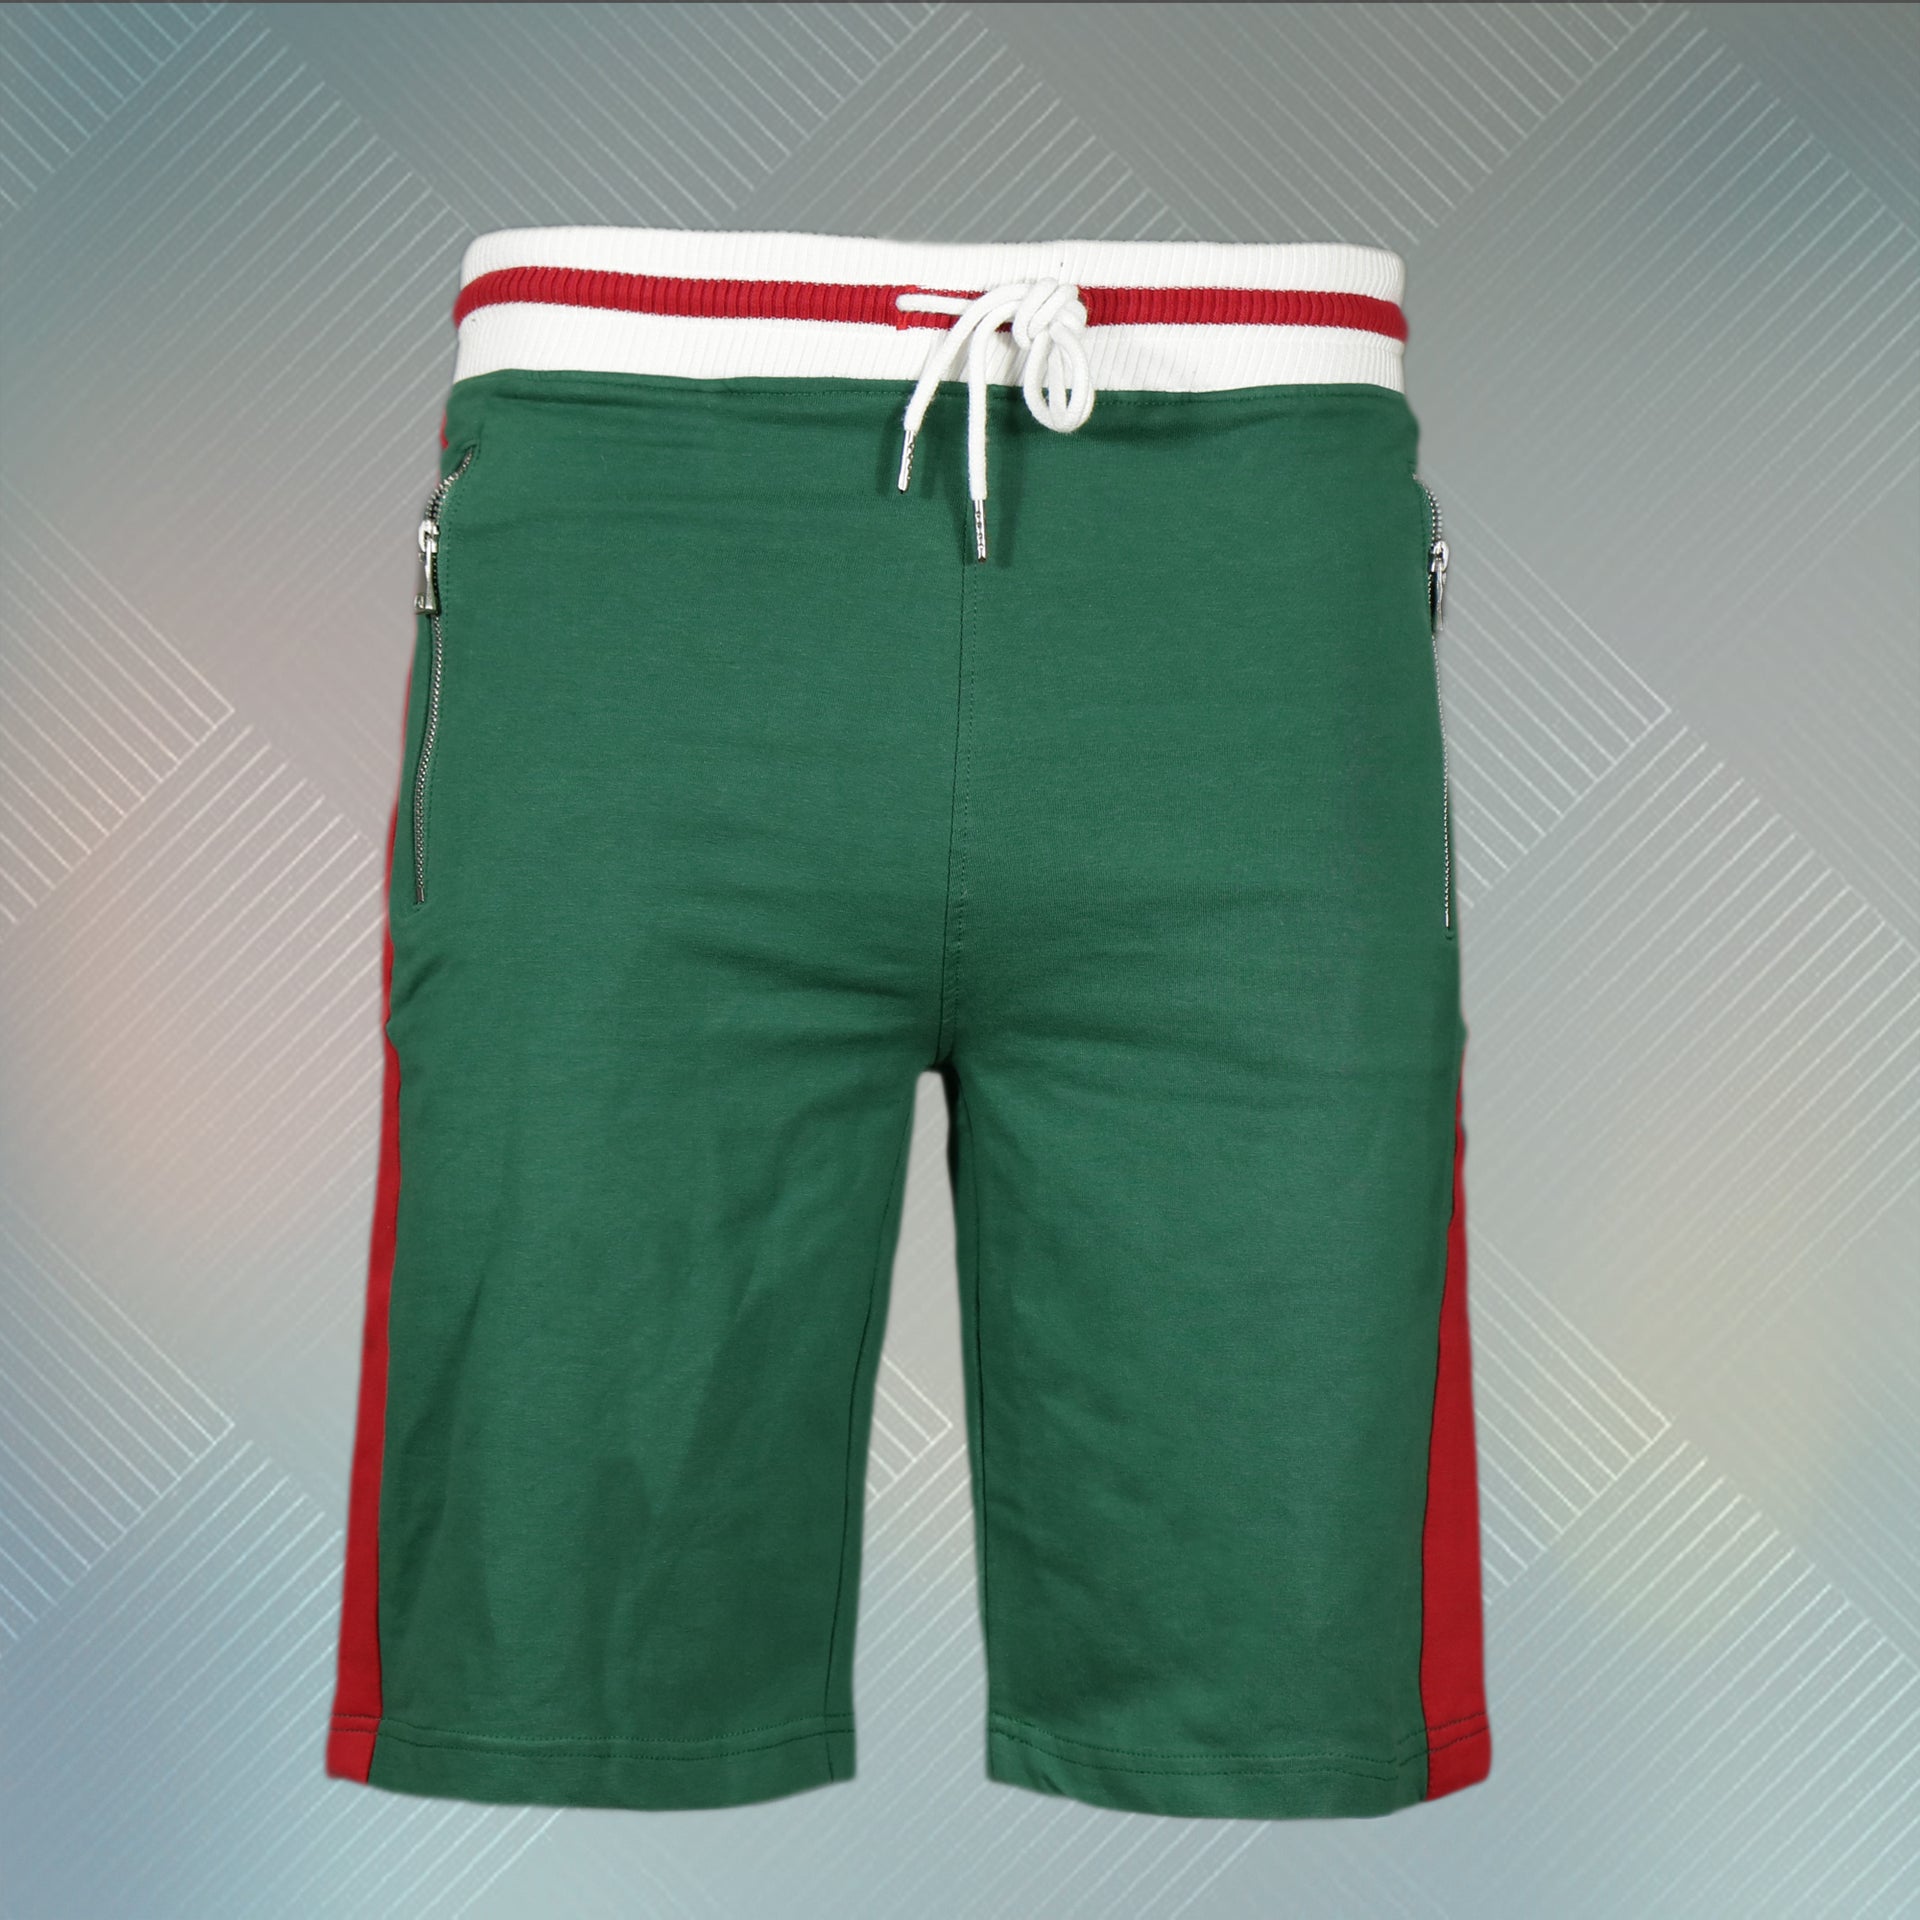 Jordan Craig Green Striped Track Shorts | Retro Inspired Italian Colorway Shorts with Zipper Pockets